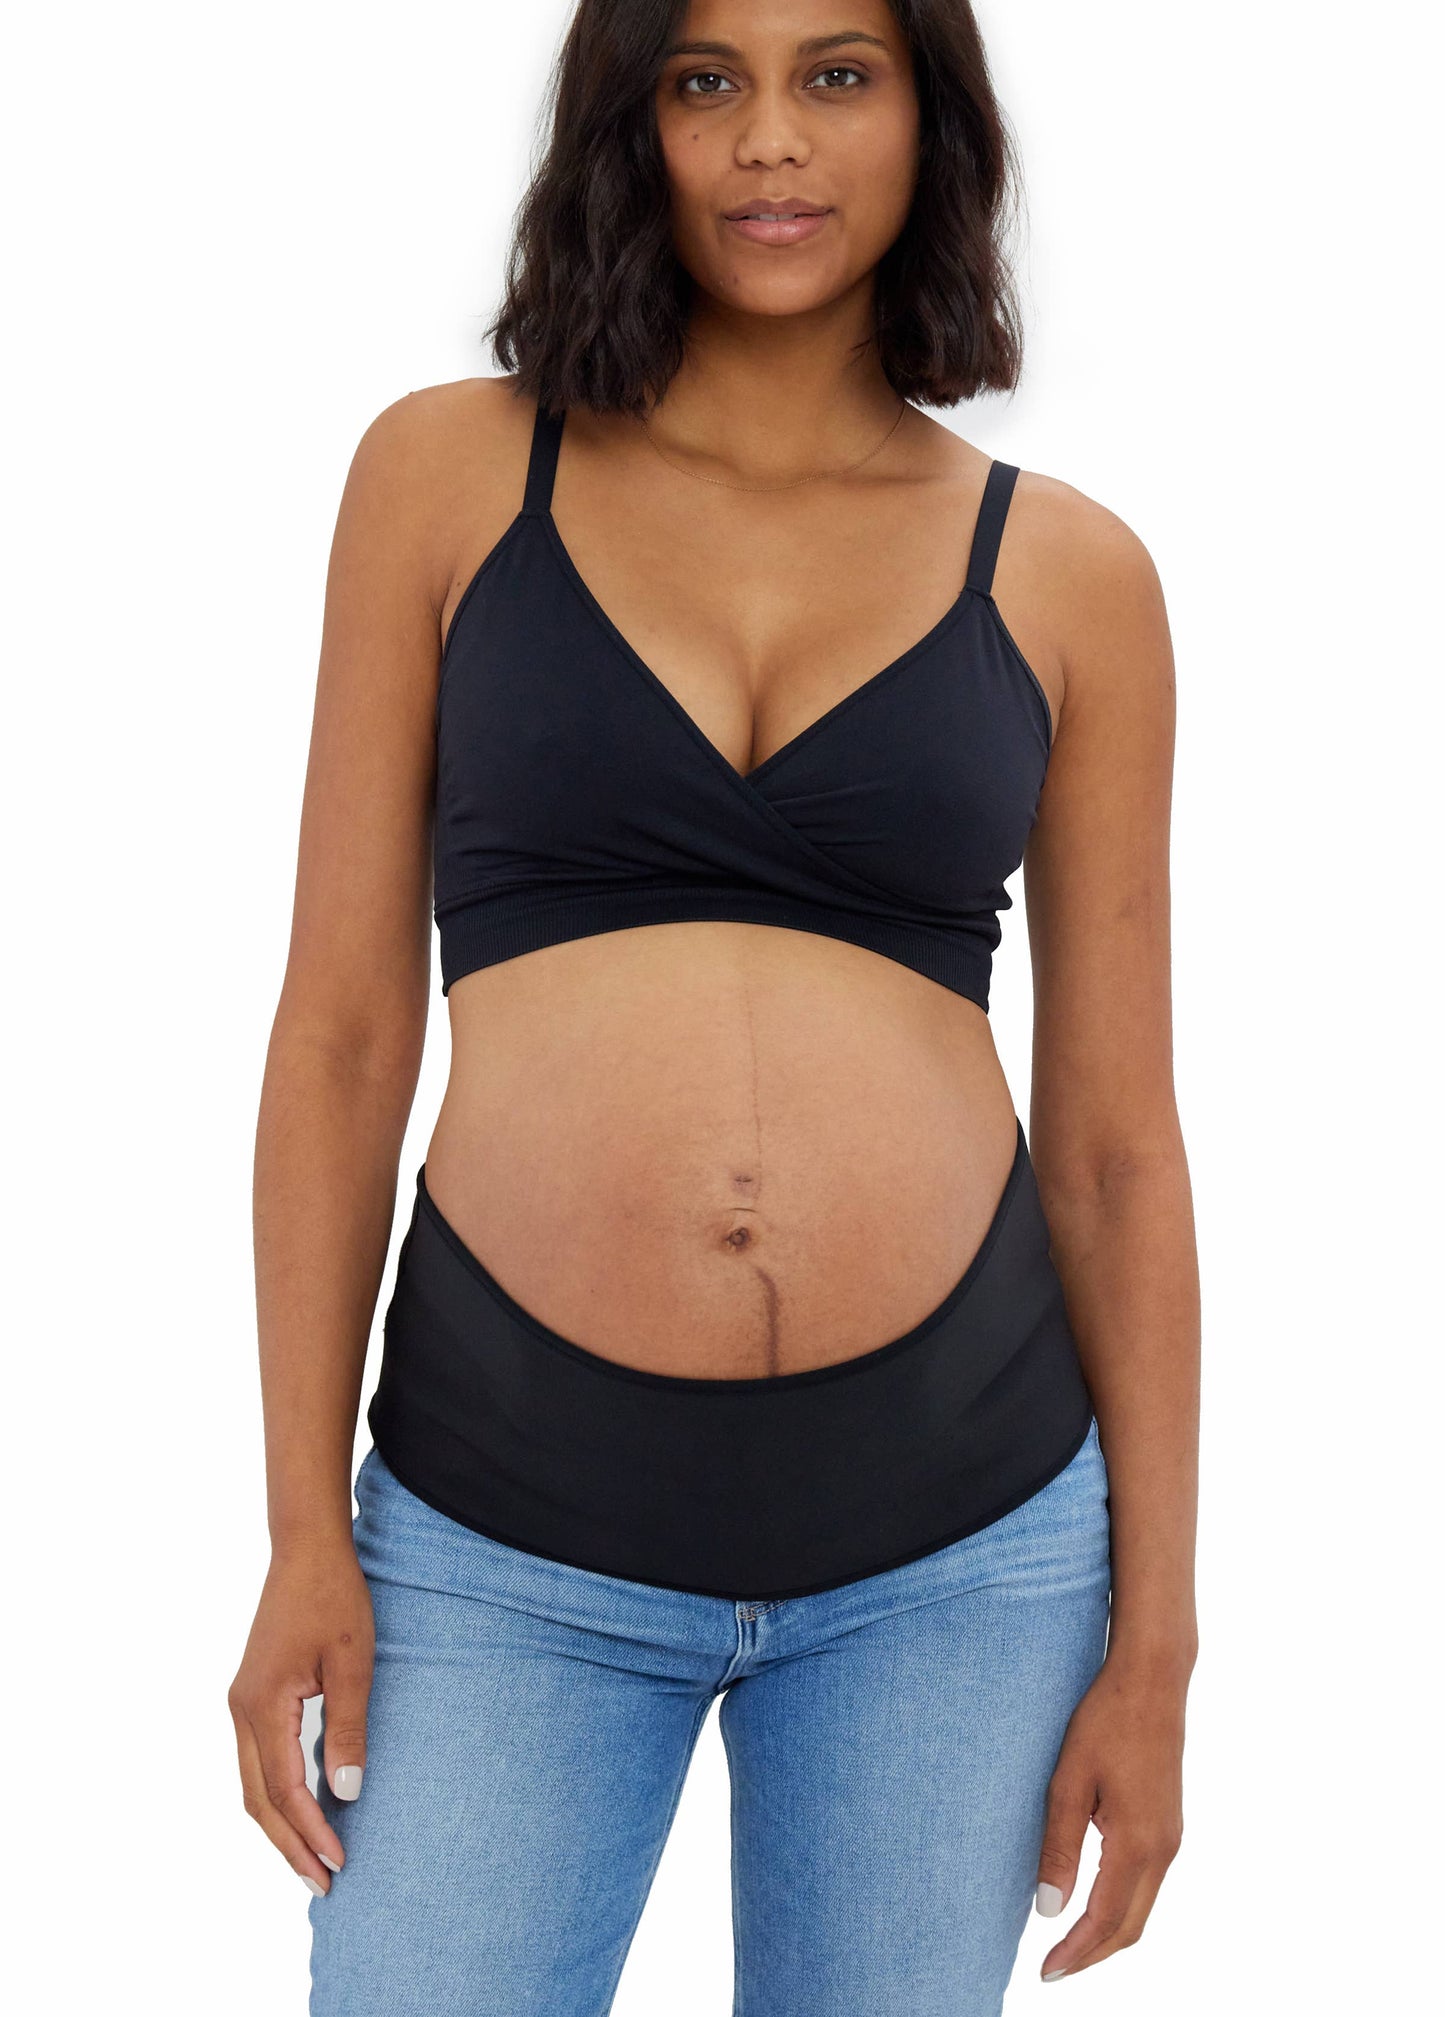 Women's Maternity Support Belt